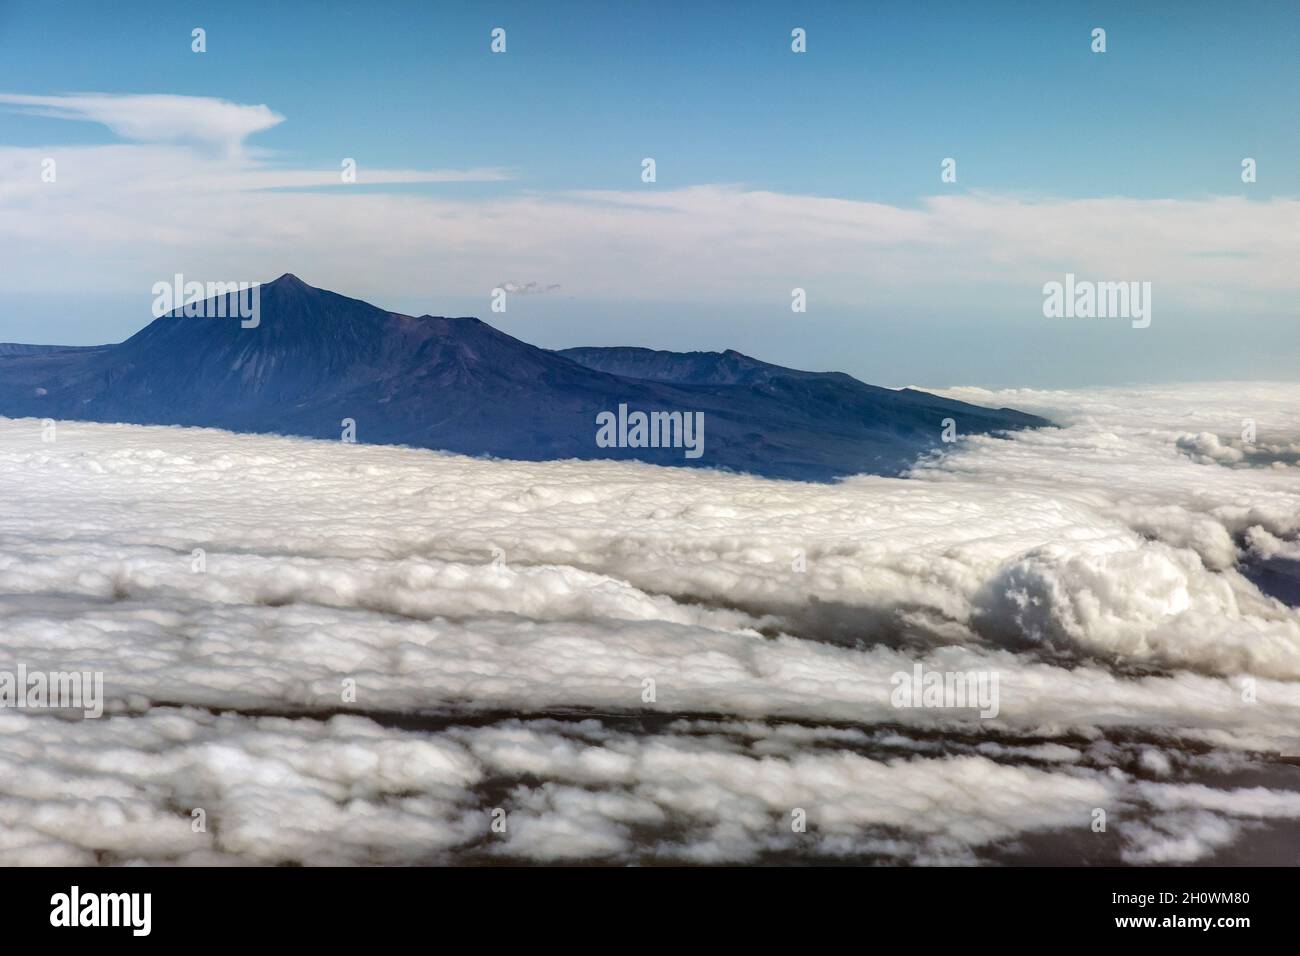 Volcán Teide en Tenerife, vista aérea Foto de stock